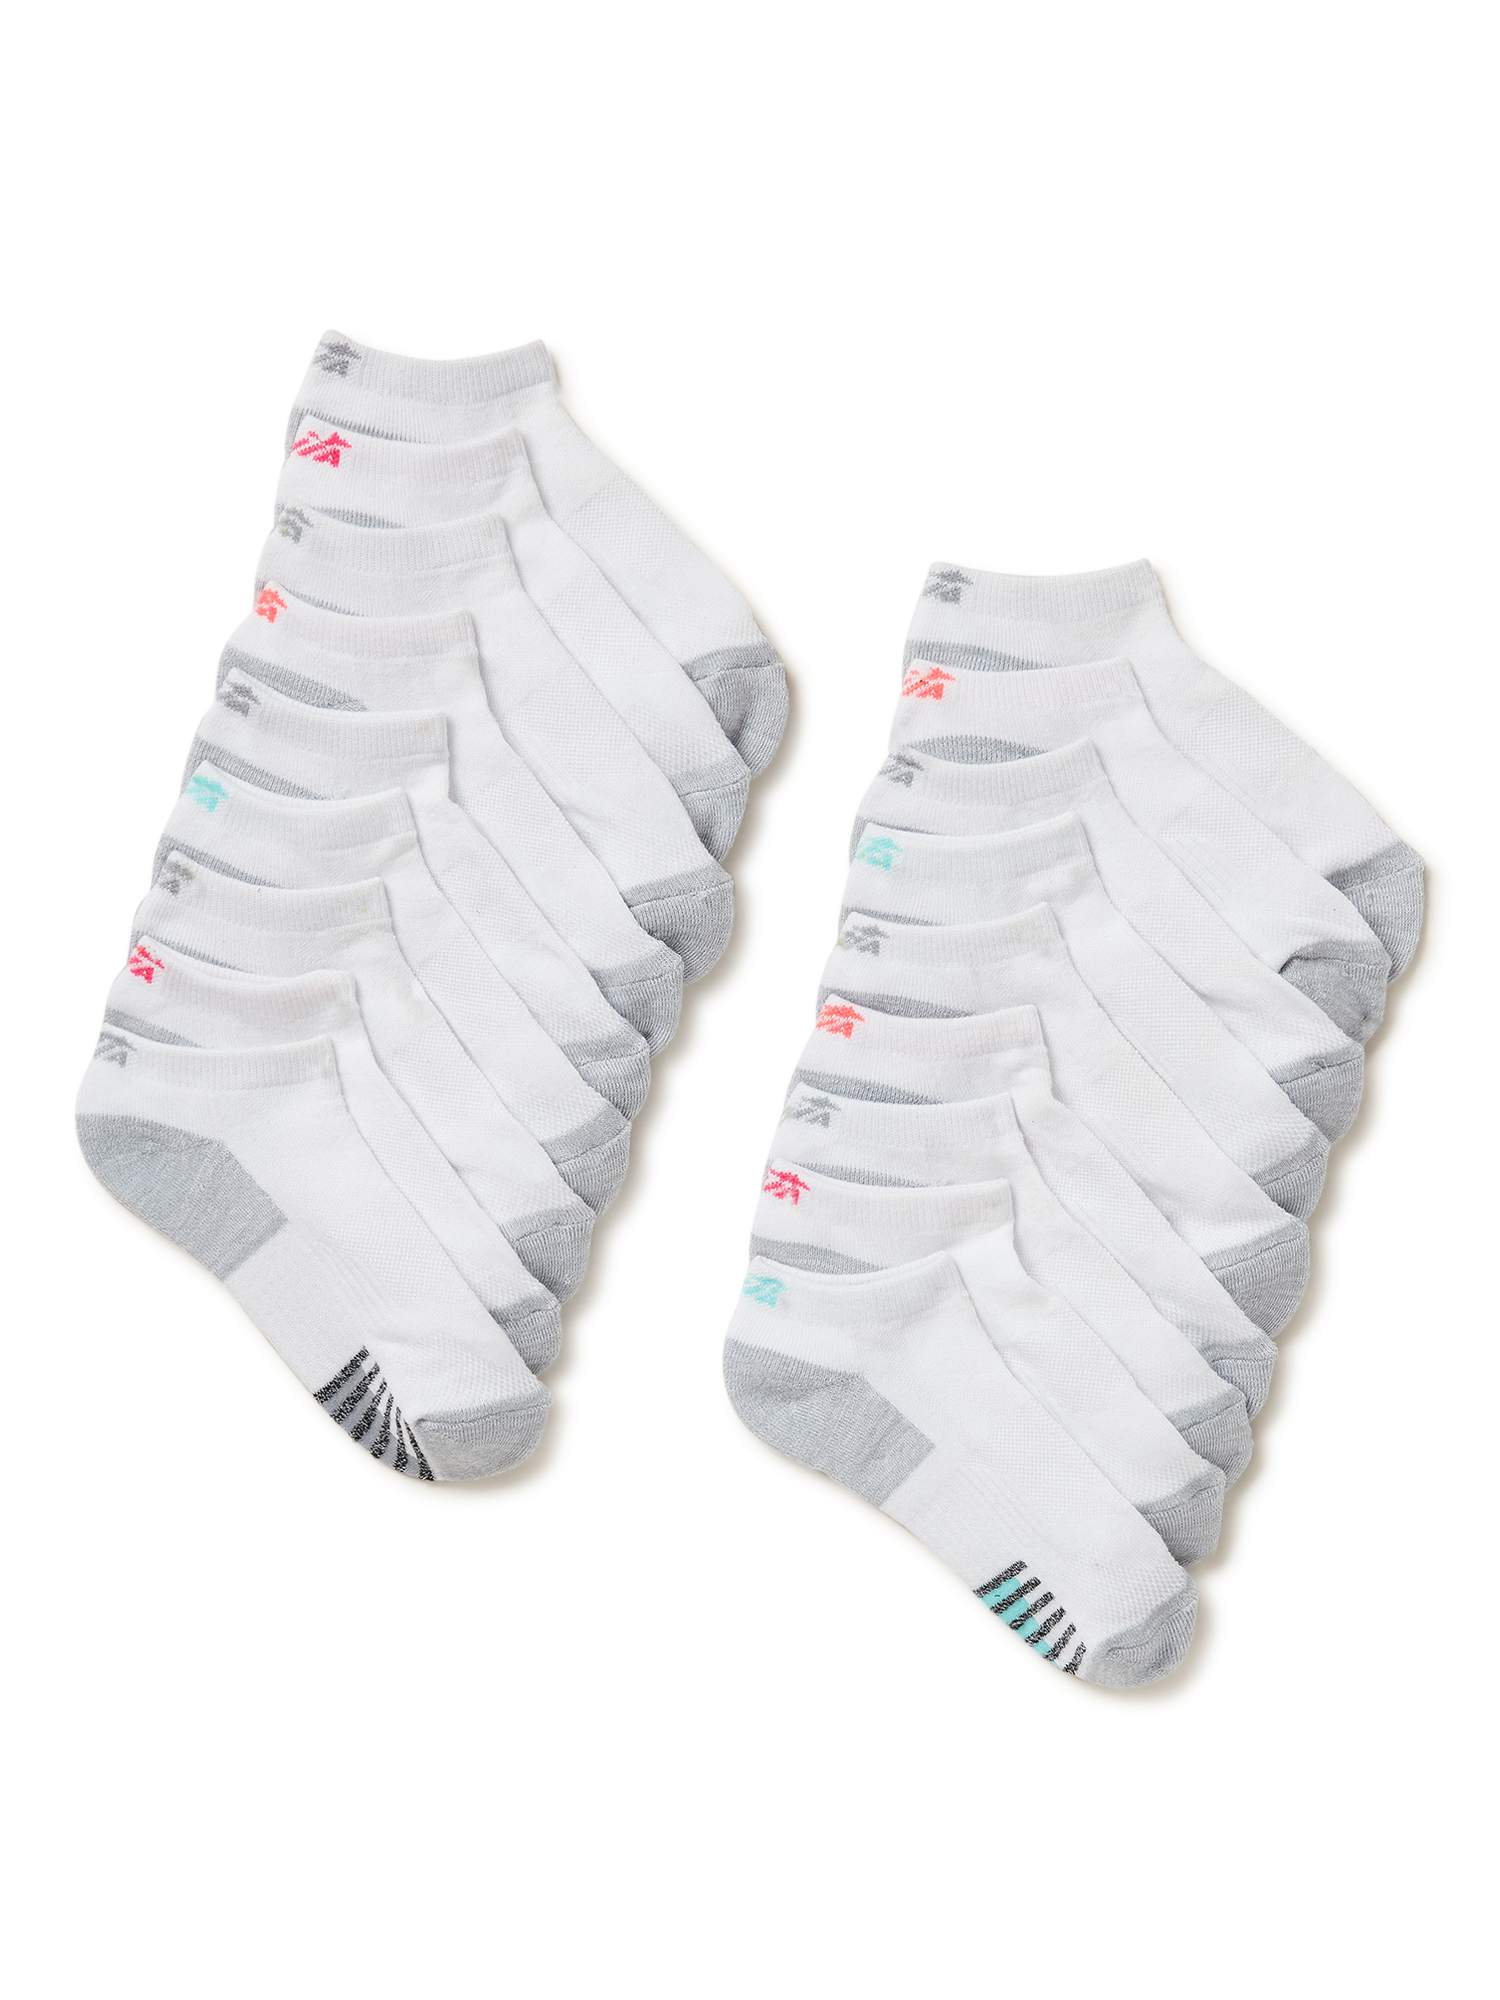 Avia Women's Performance Lowcut Socks, 10-Pack - Walmart.com